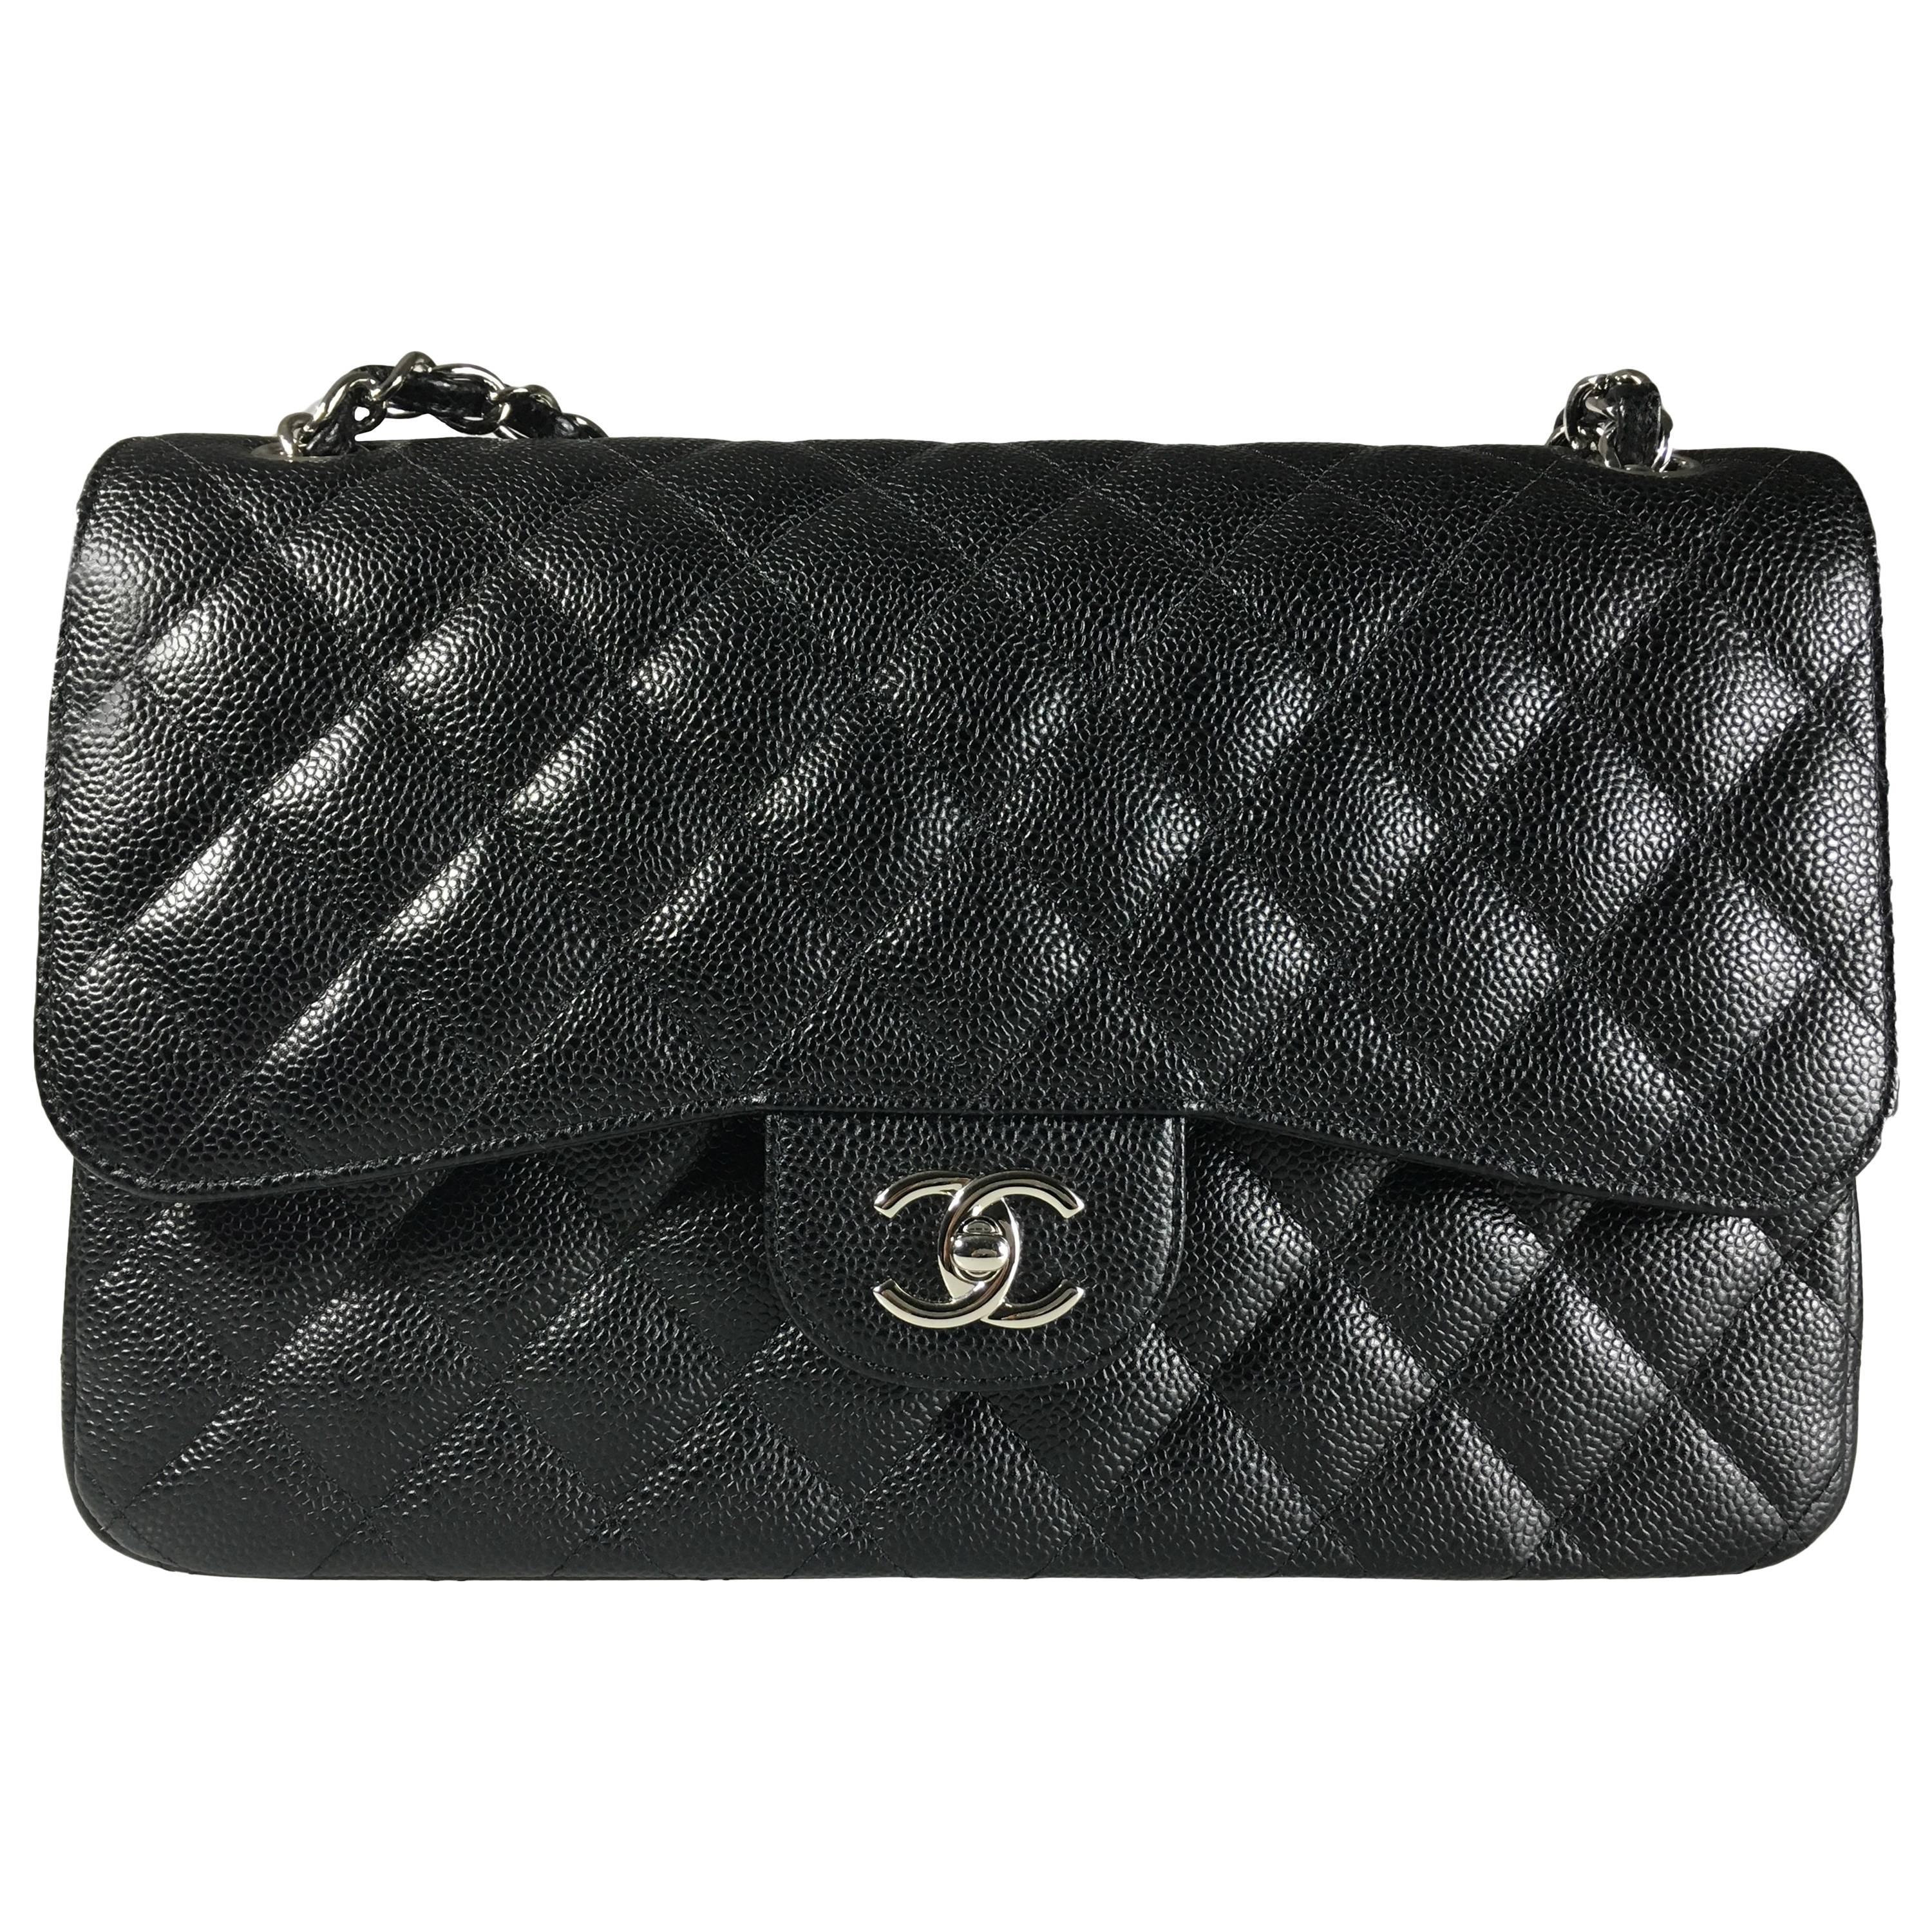 Chanel Black Caviar Leather Classic Jumbo Double Flap Bag